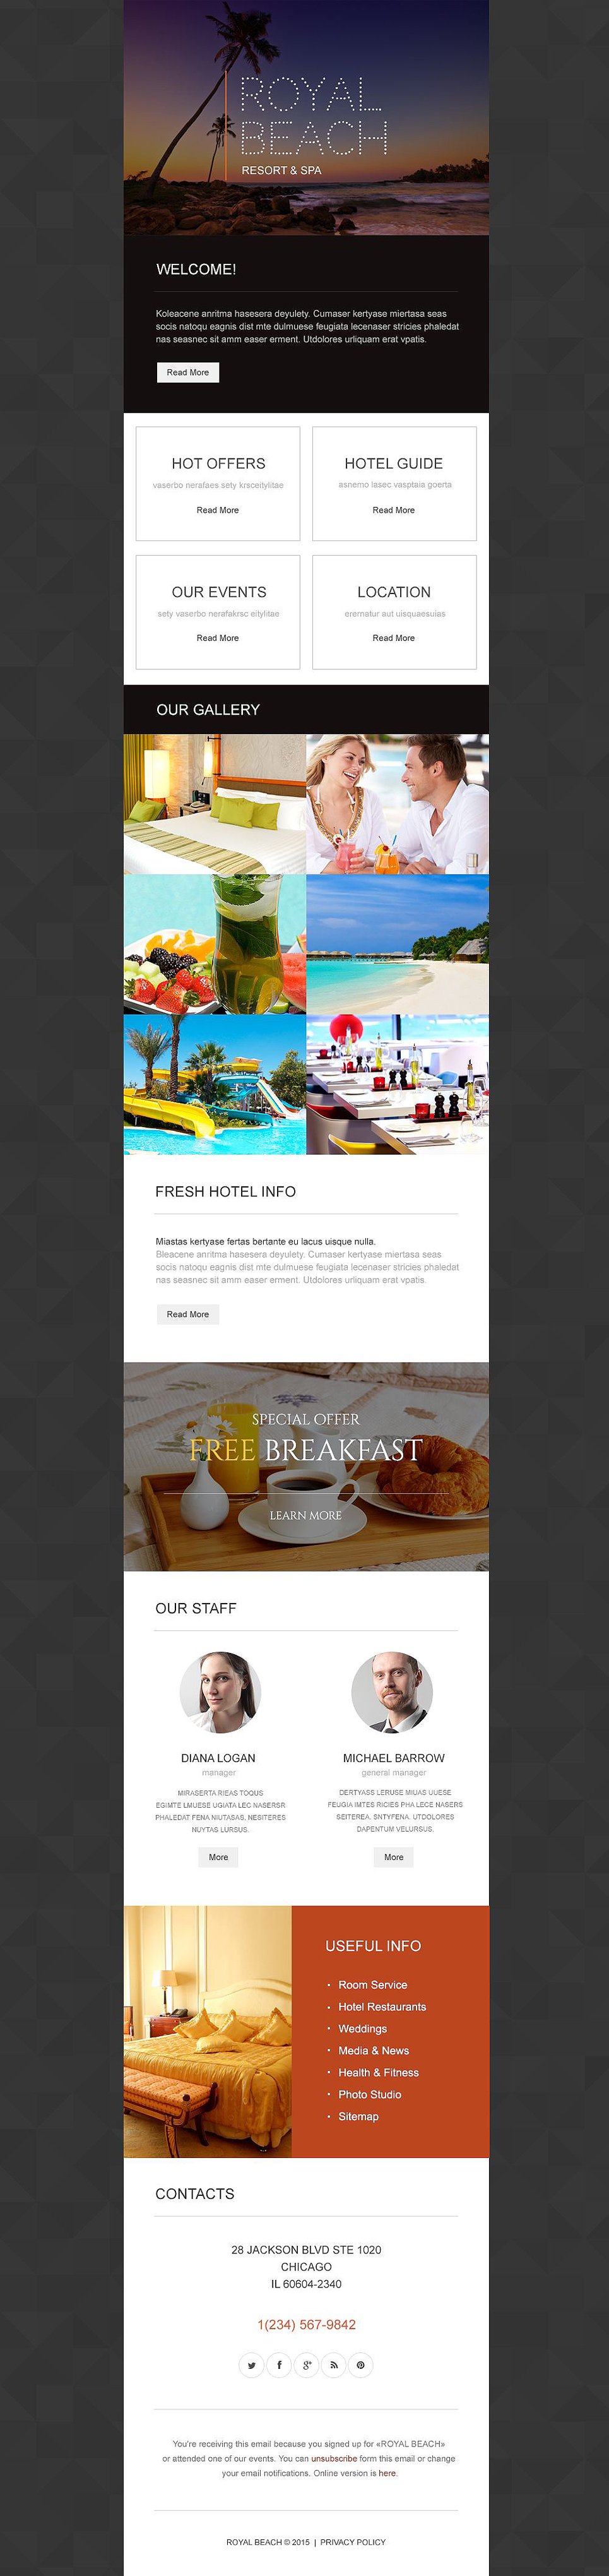 Travel Agency Responsive Newsletter Template New Screenshots BIG